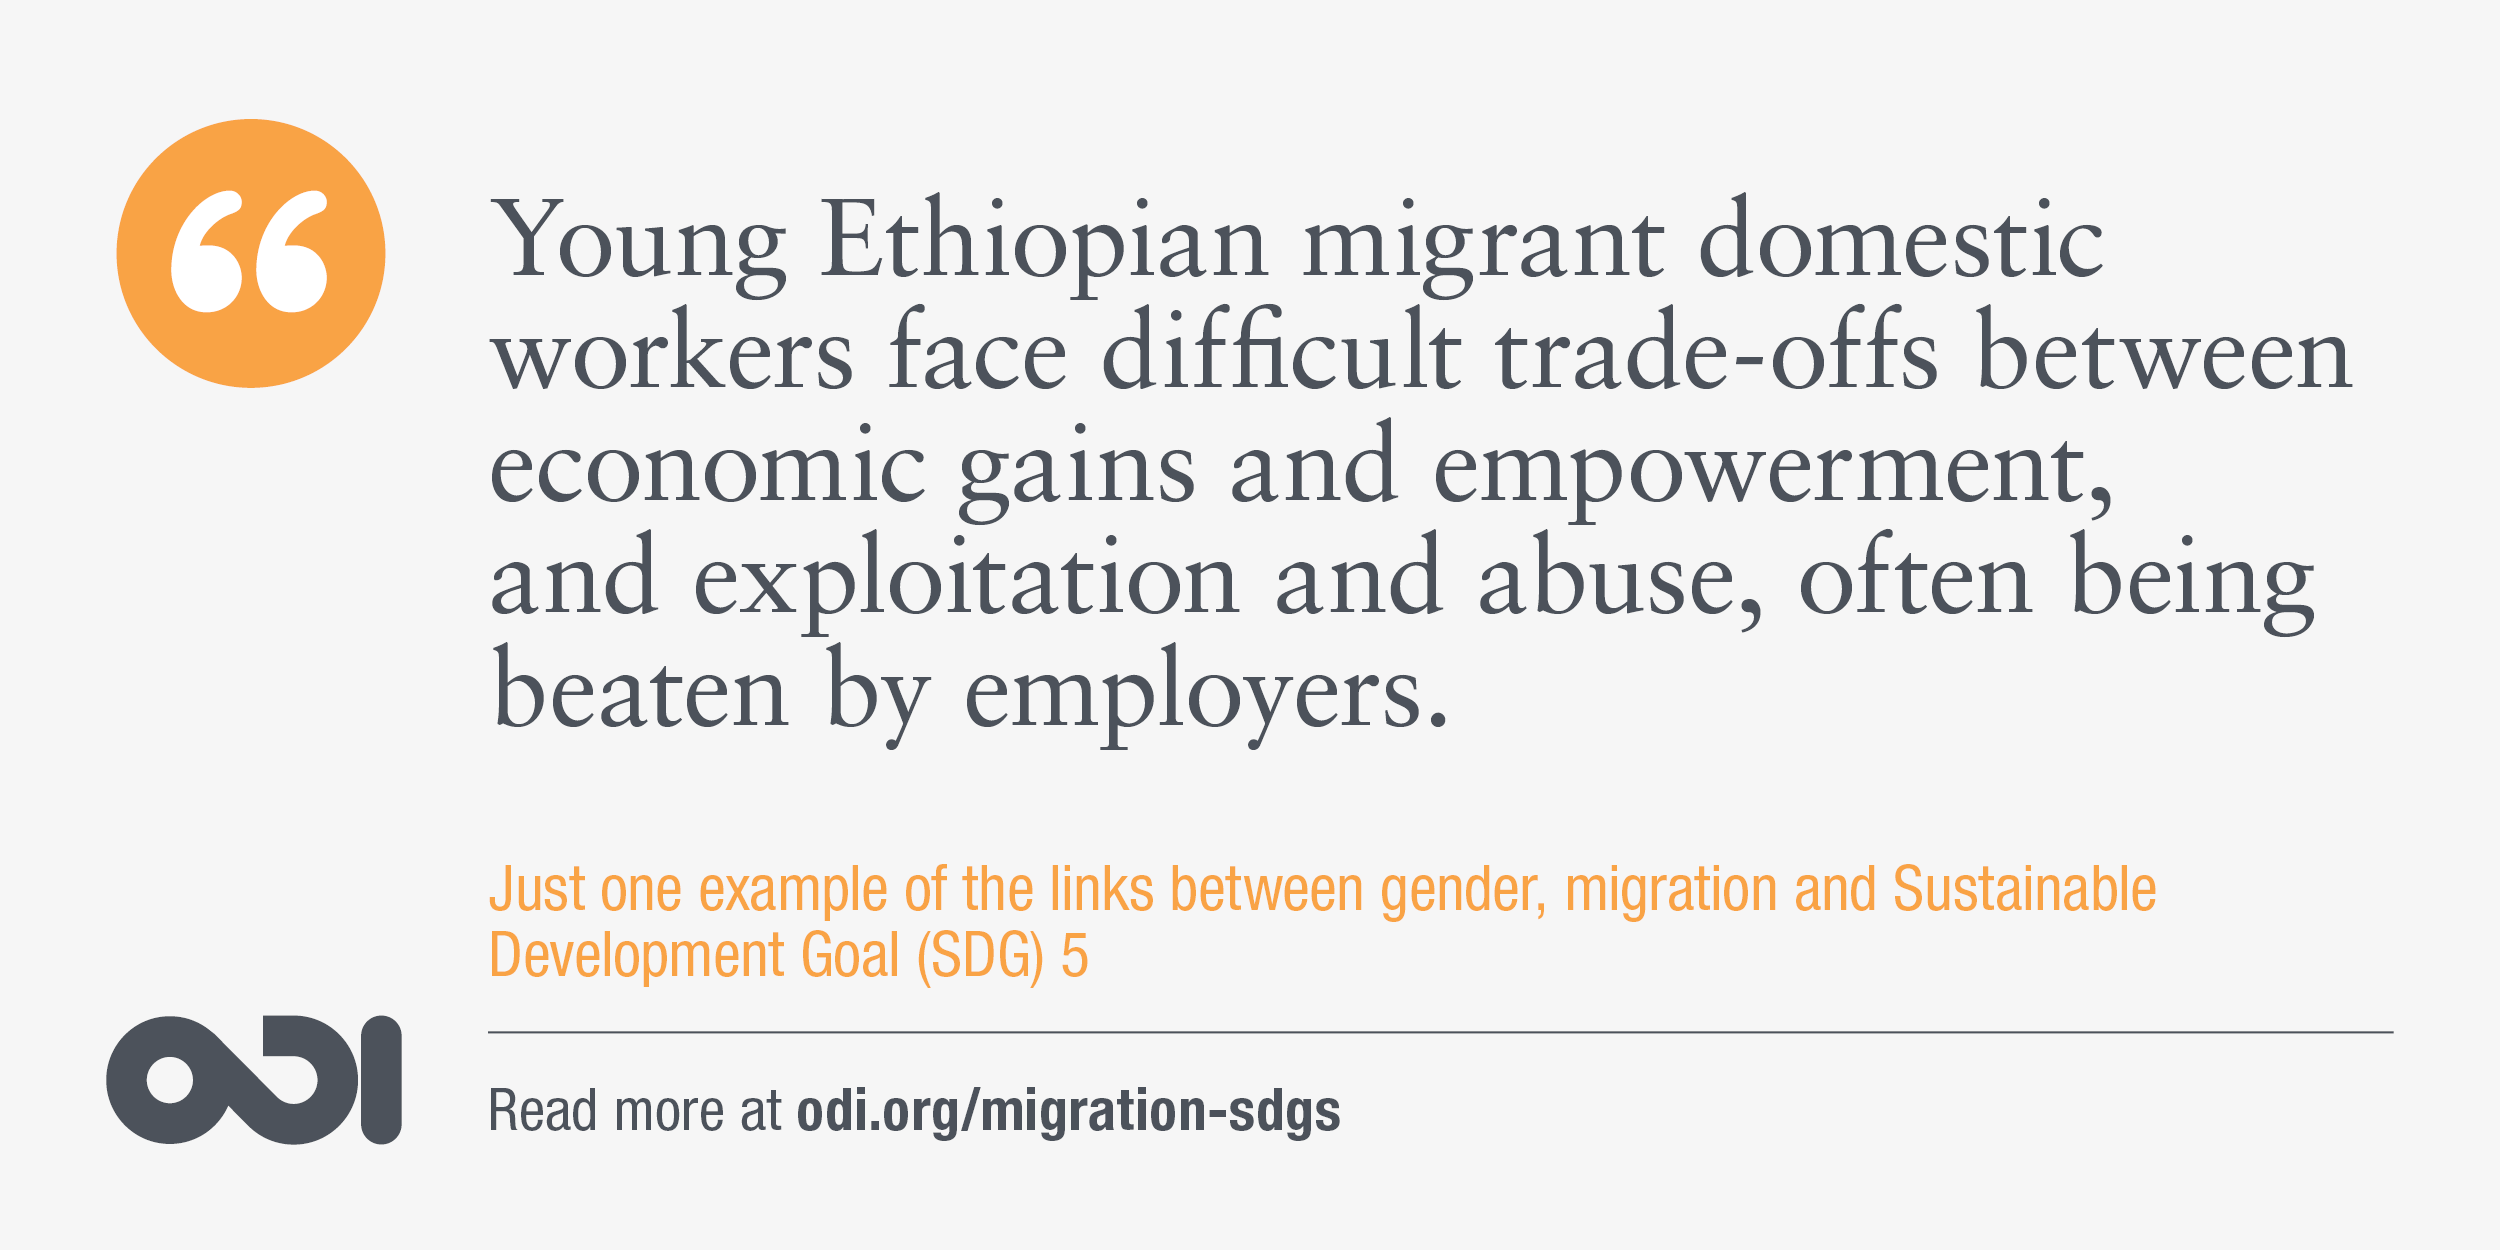 The links between gender, migration and SDG 5.